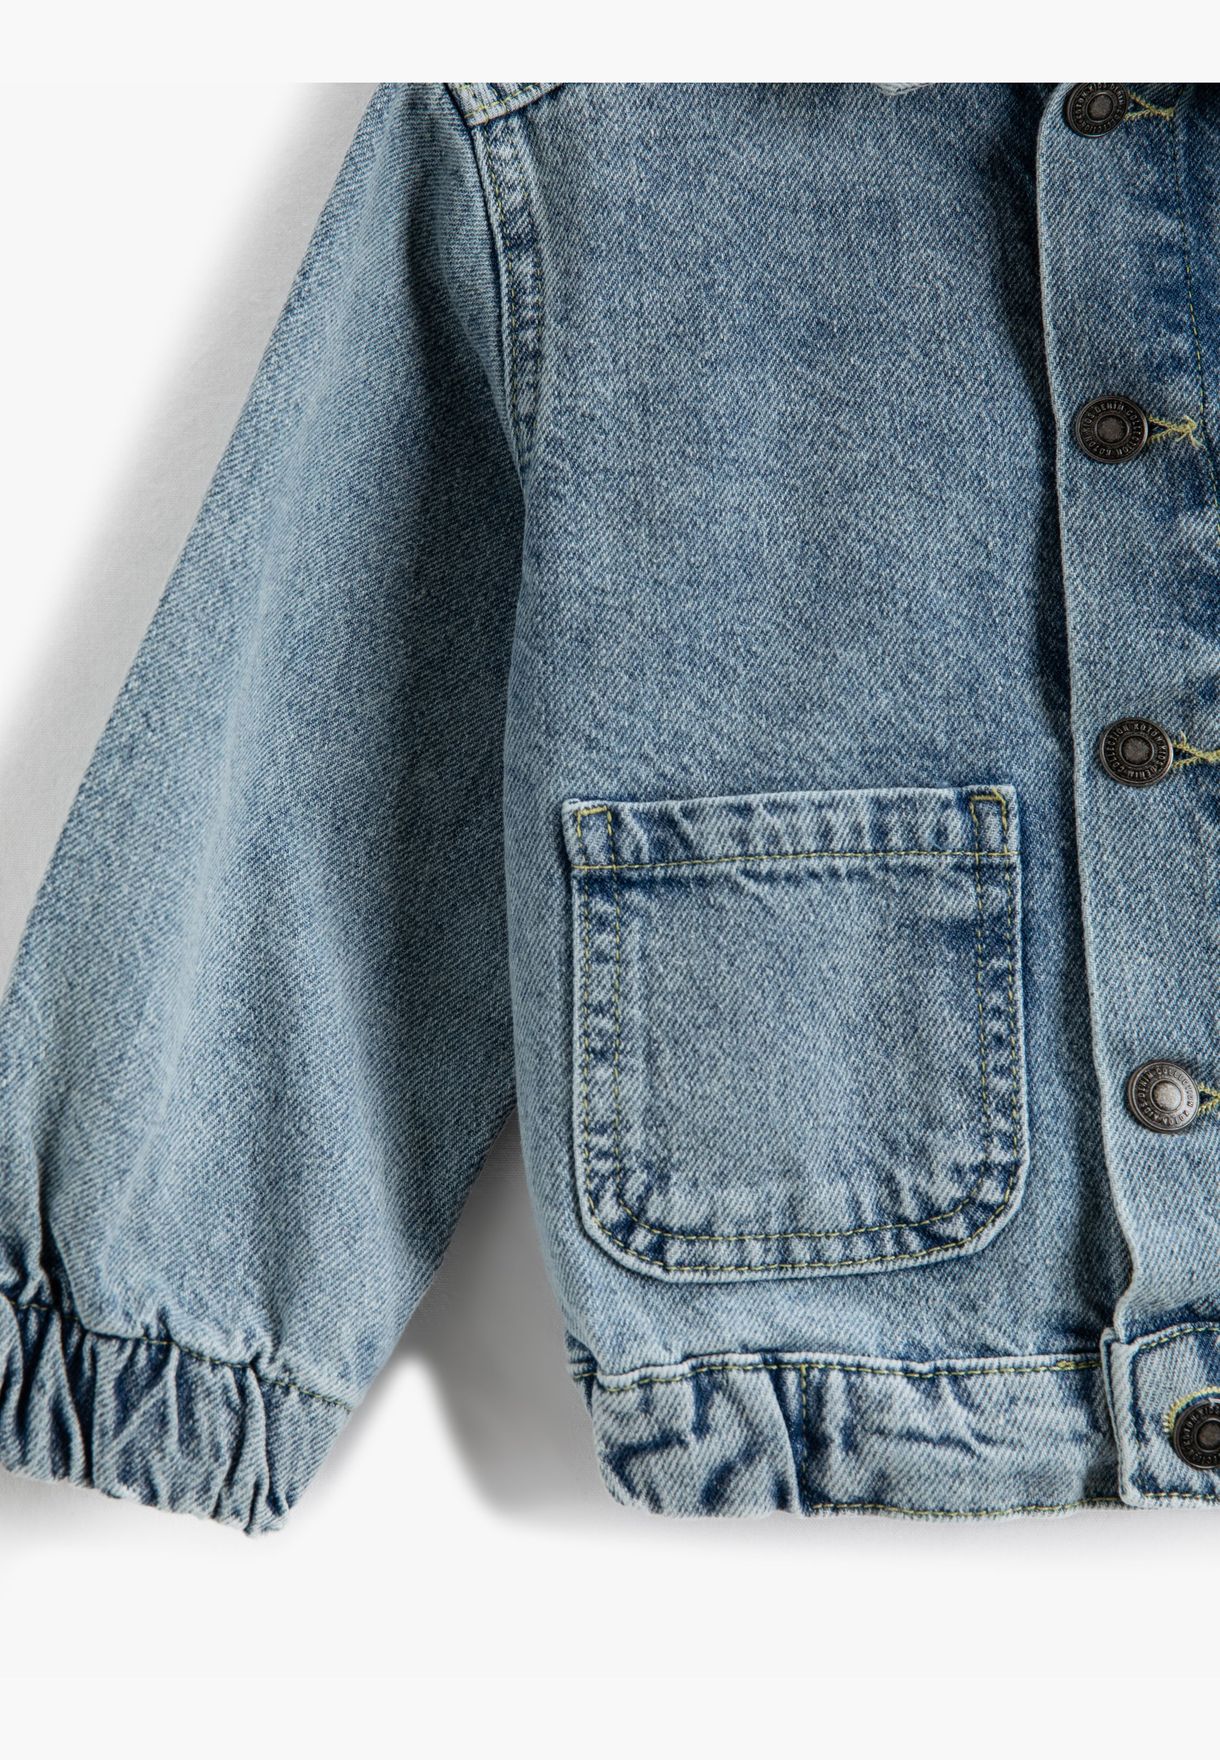 Oversized Hooded Jean Jacket Pocket Detail Elastic Cuffs Cotton